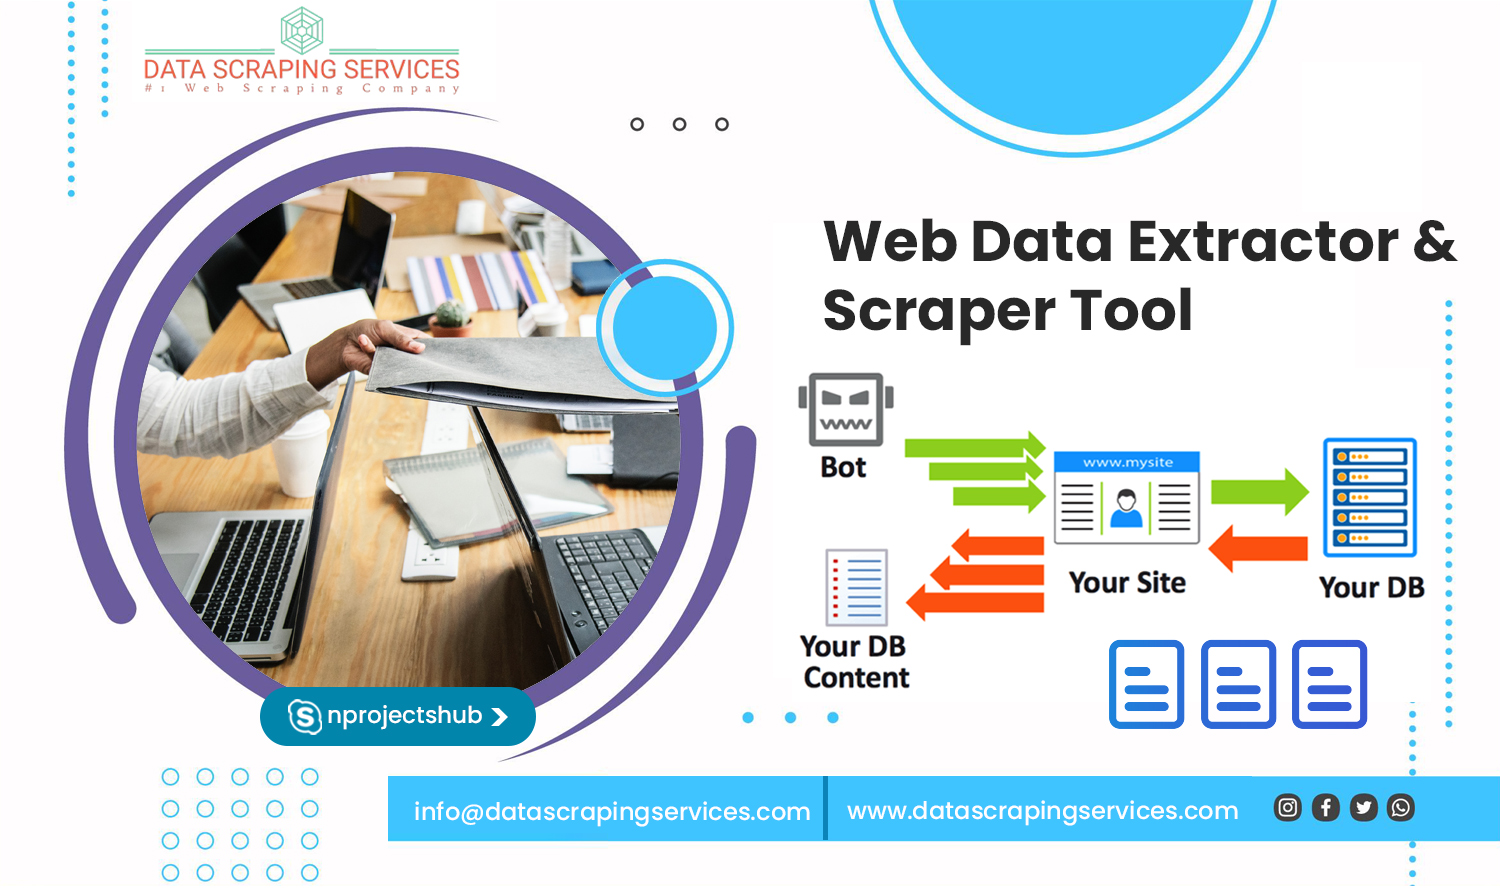 Web Data Extractor & Scraper Tool